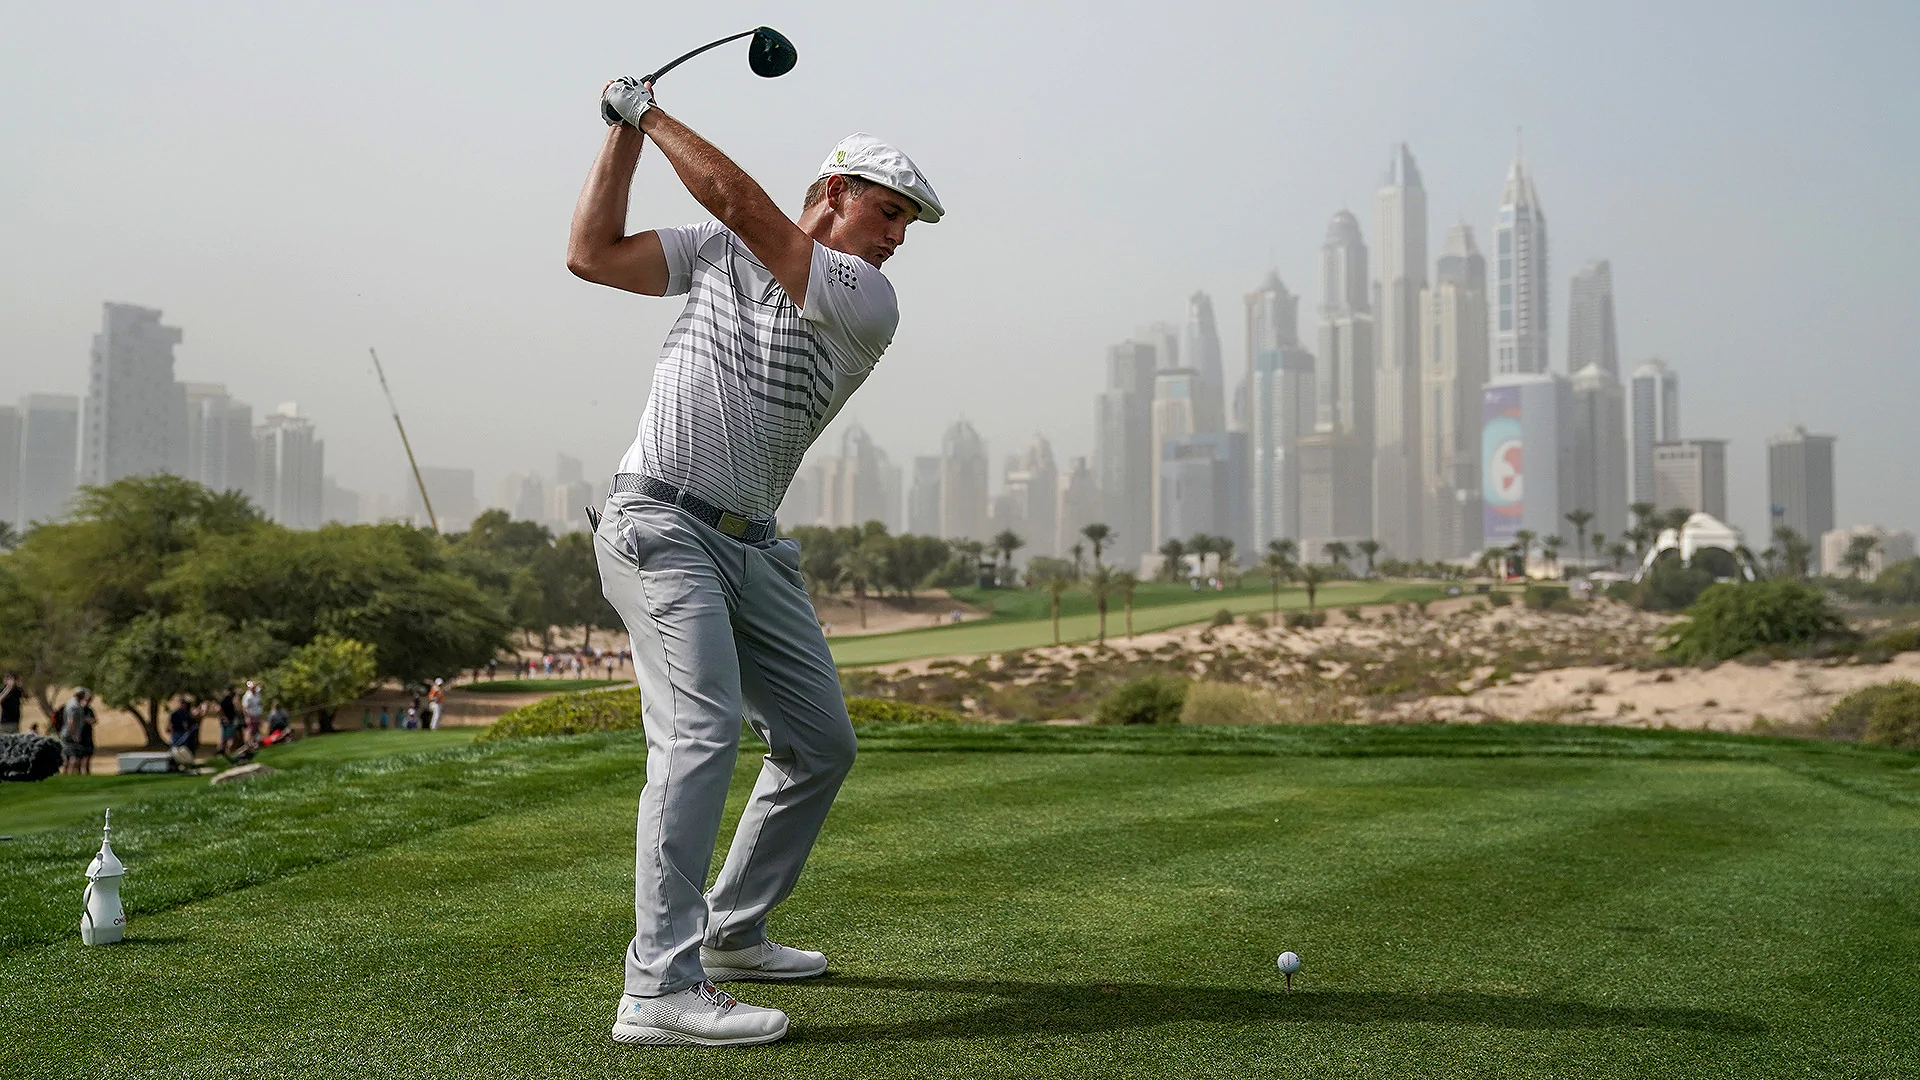 Eyeing international win, DeChambeau opens with 66 in Dubai